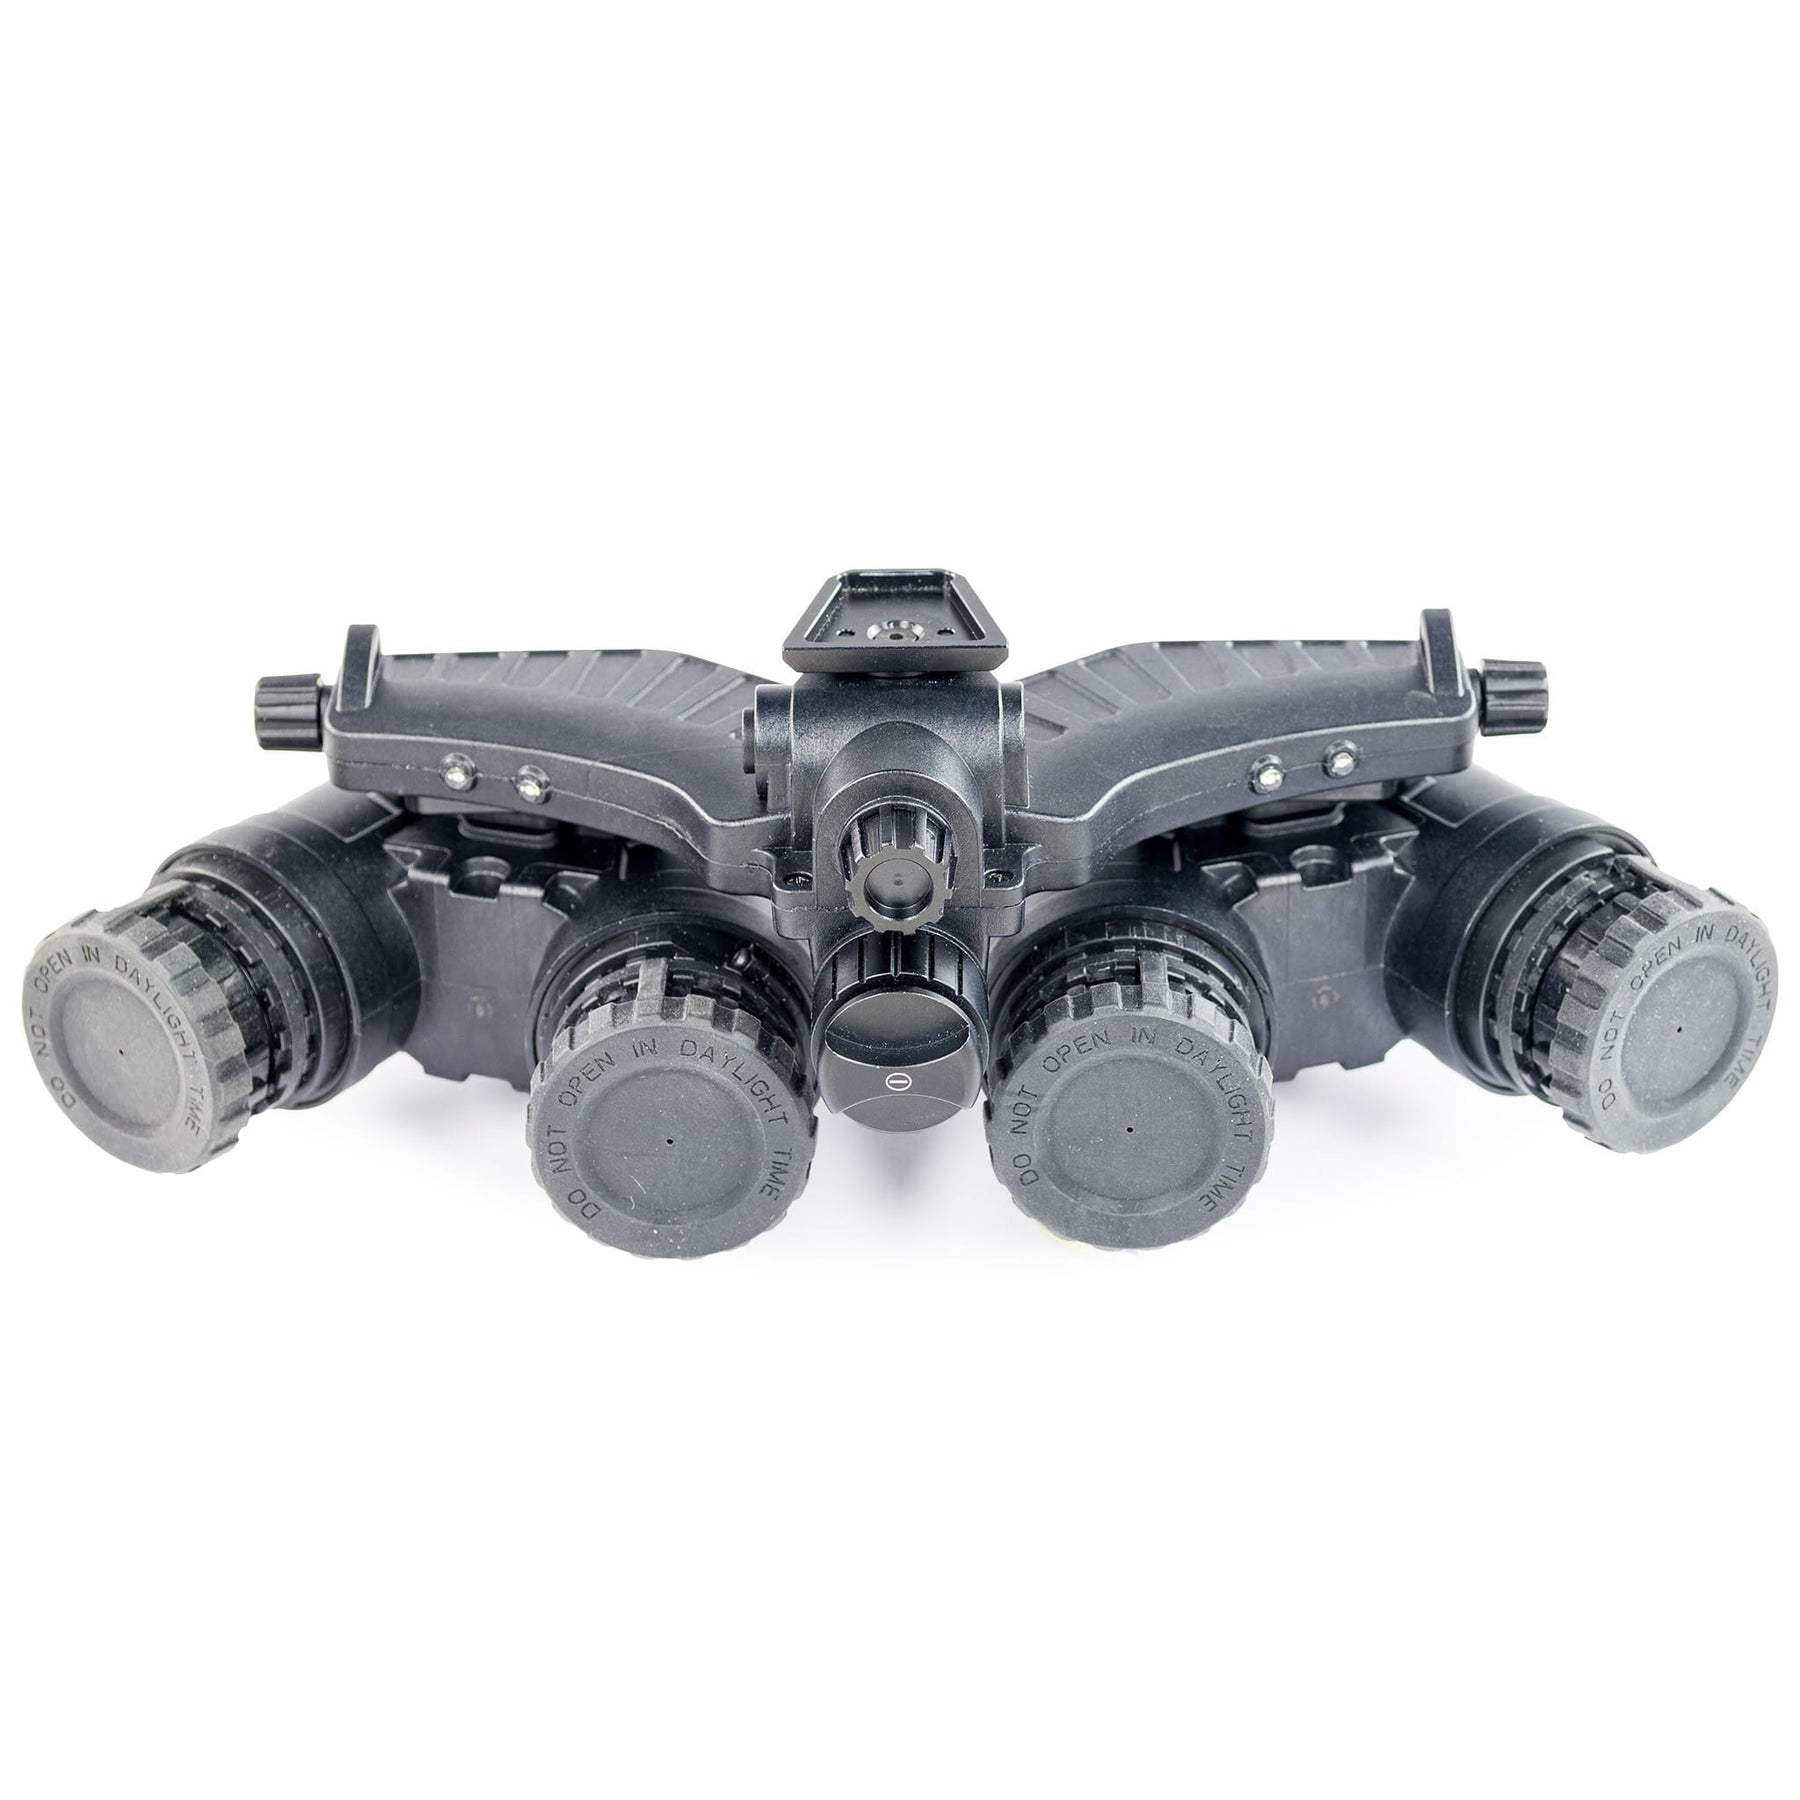 QTNVG – Quad Tube Night Vision Goggles Pro Model – Highland Zeffree  Tactical